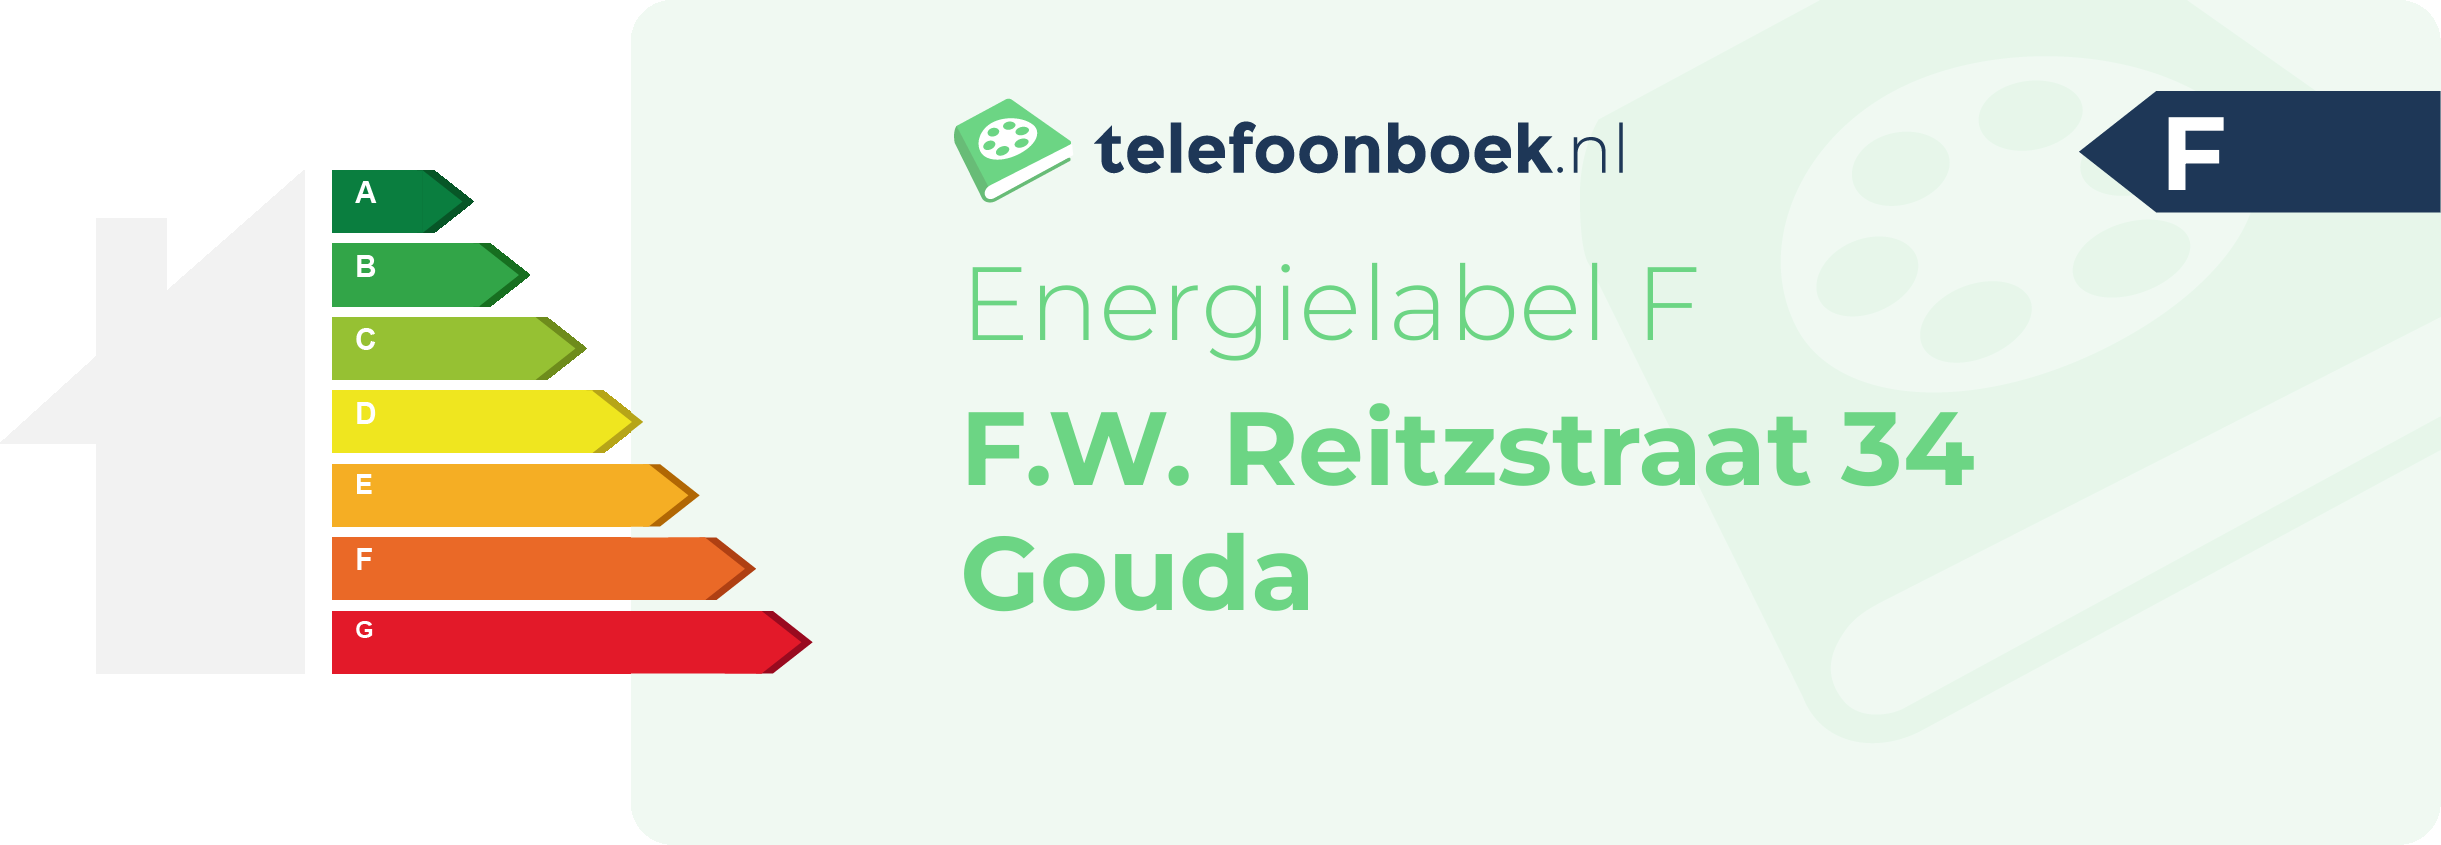 Energielabel F.W. Reitzstraat 34 Gouda